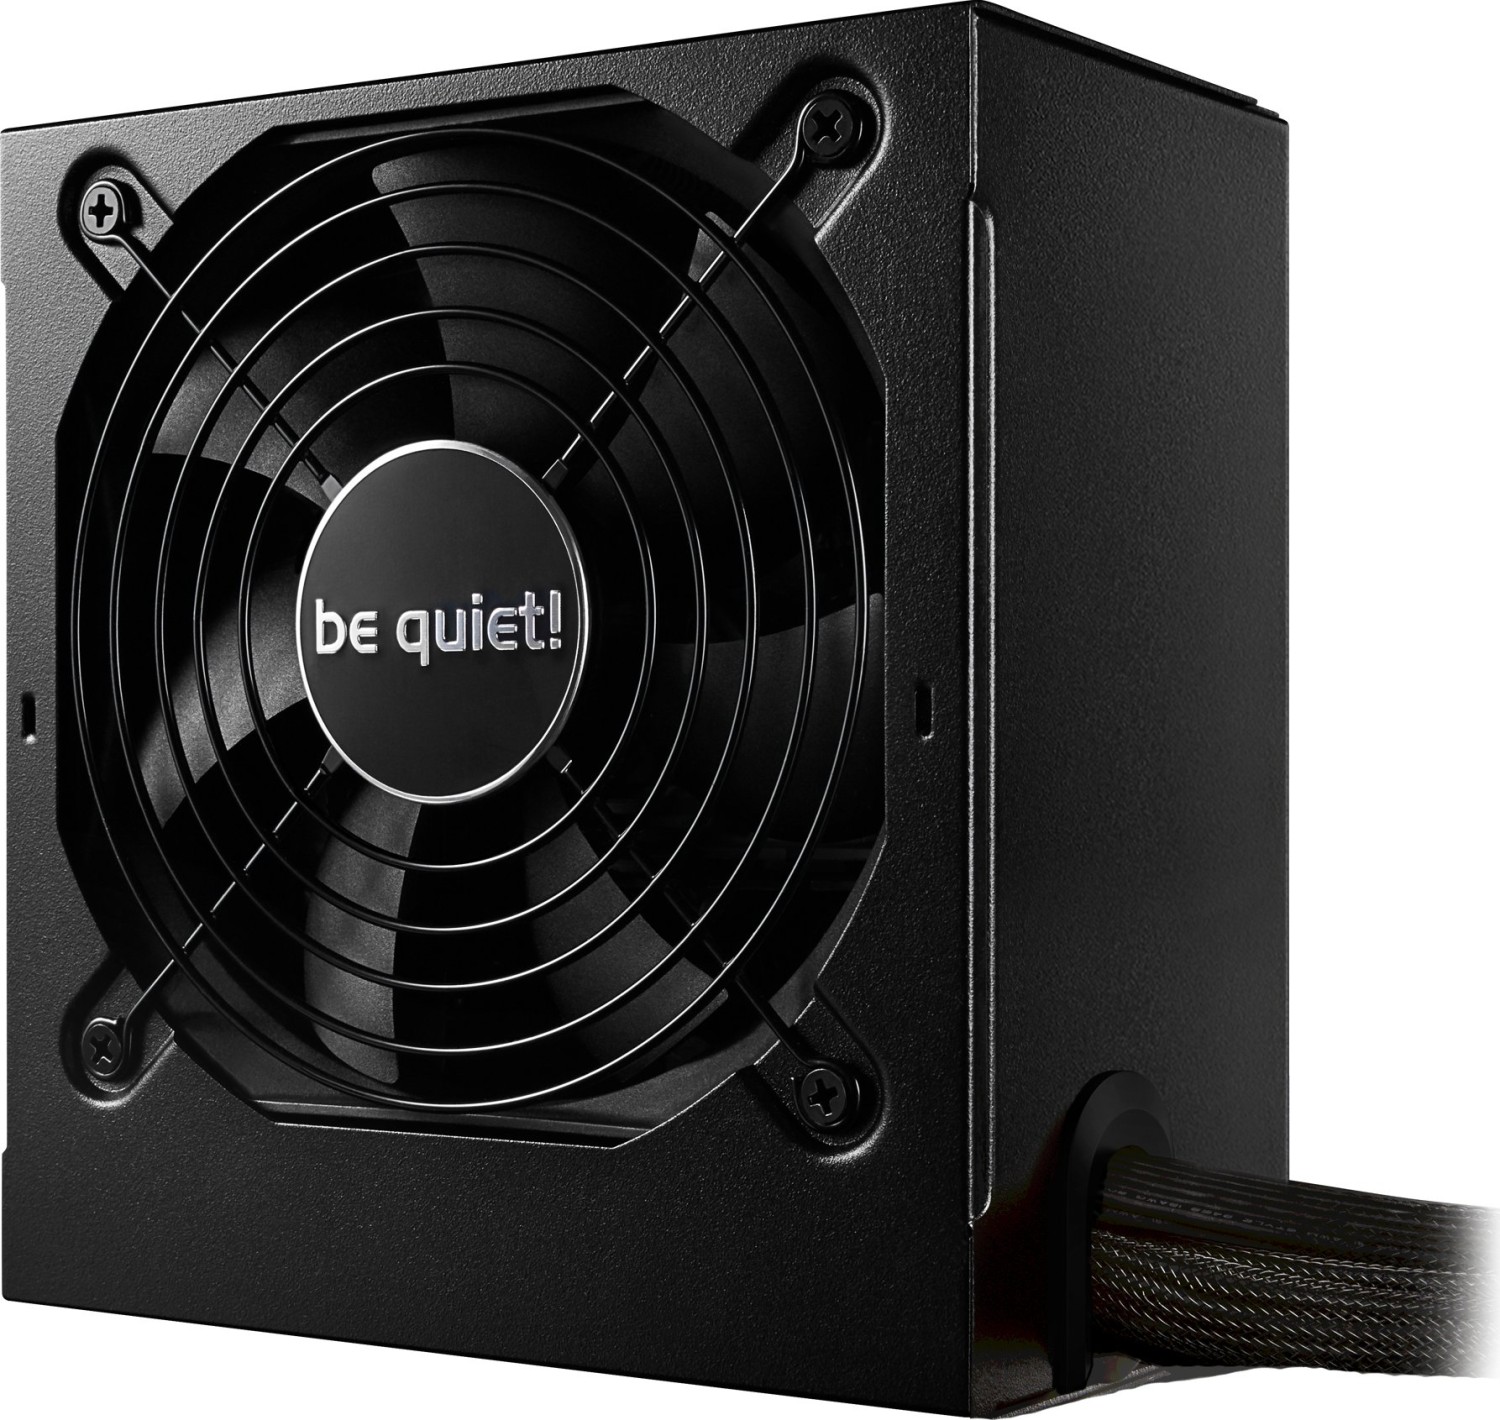 650W be quiet! System Power 10, ATX 2.52 - BN328